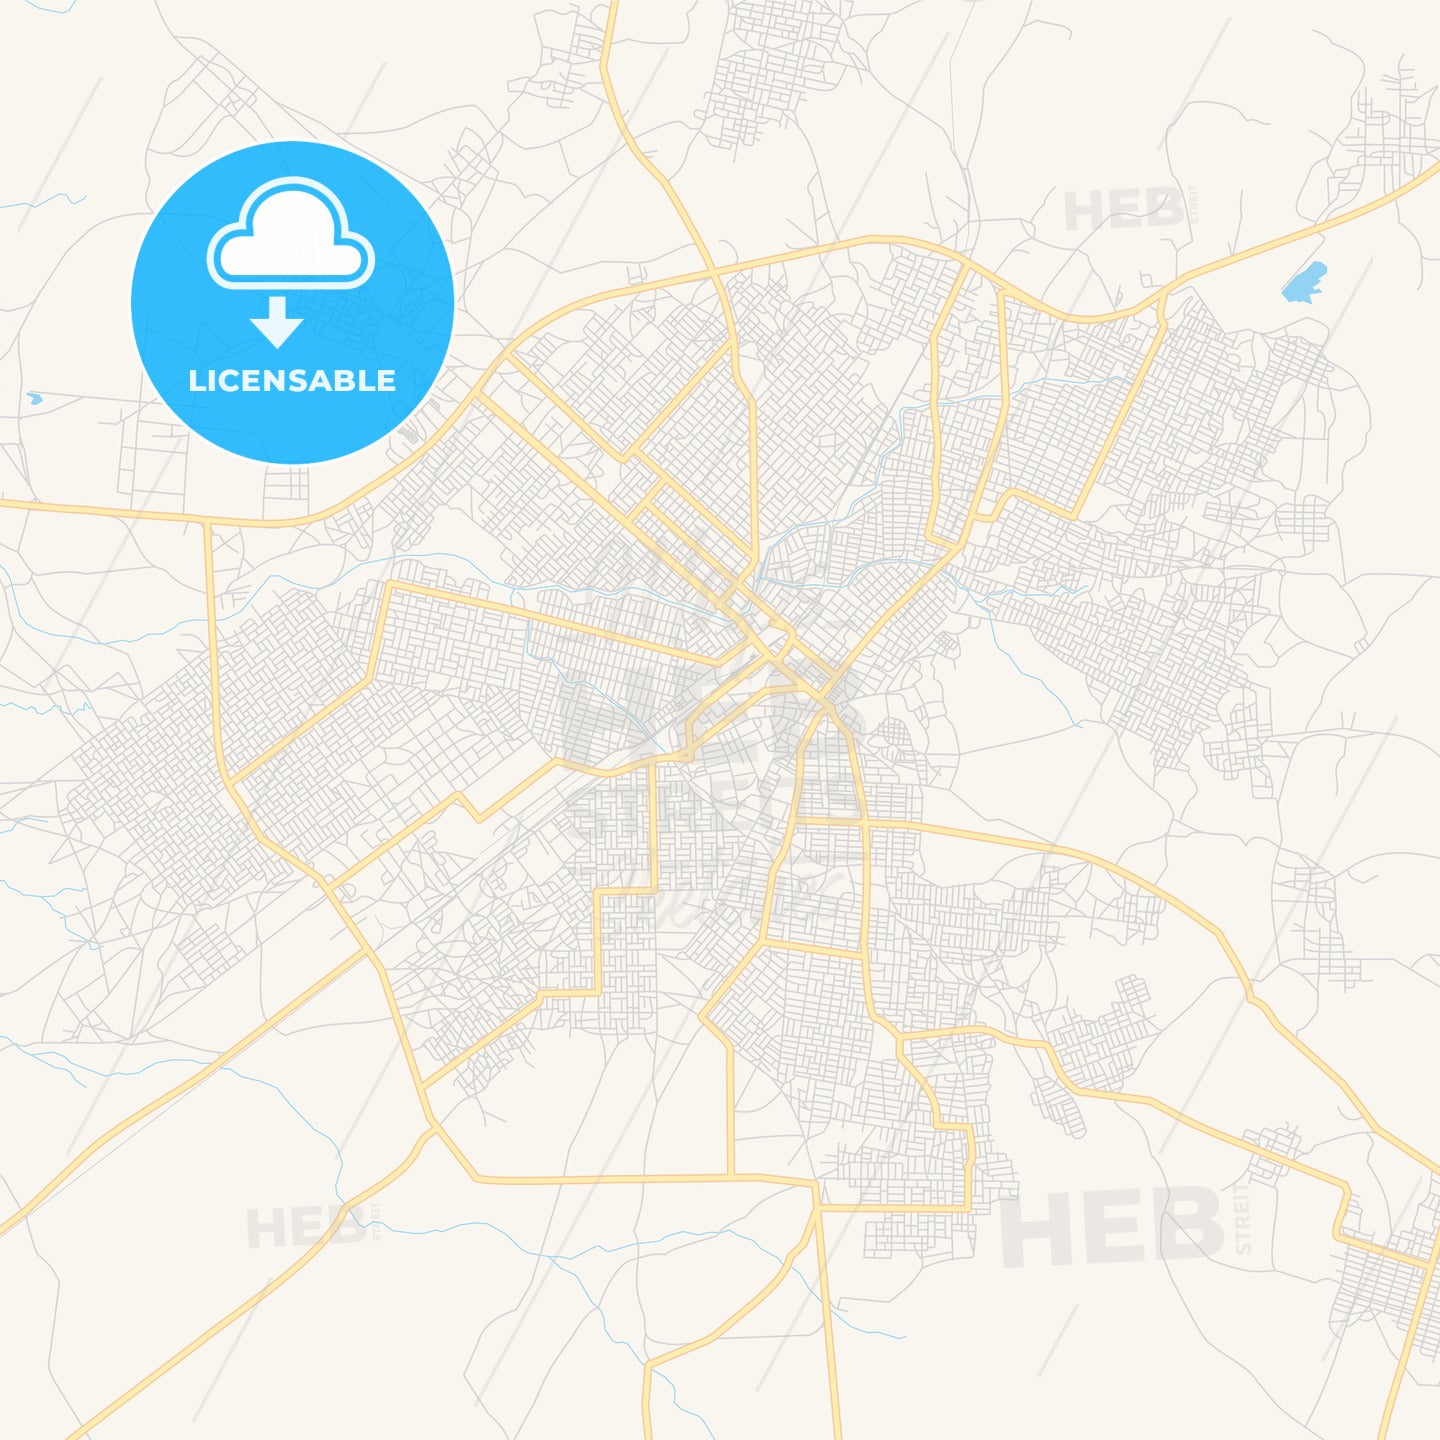 Printable street map of Al Qadarif, Sudan